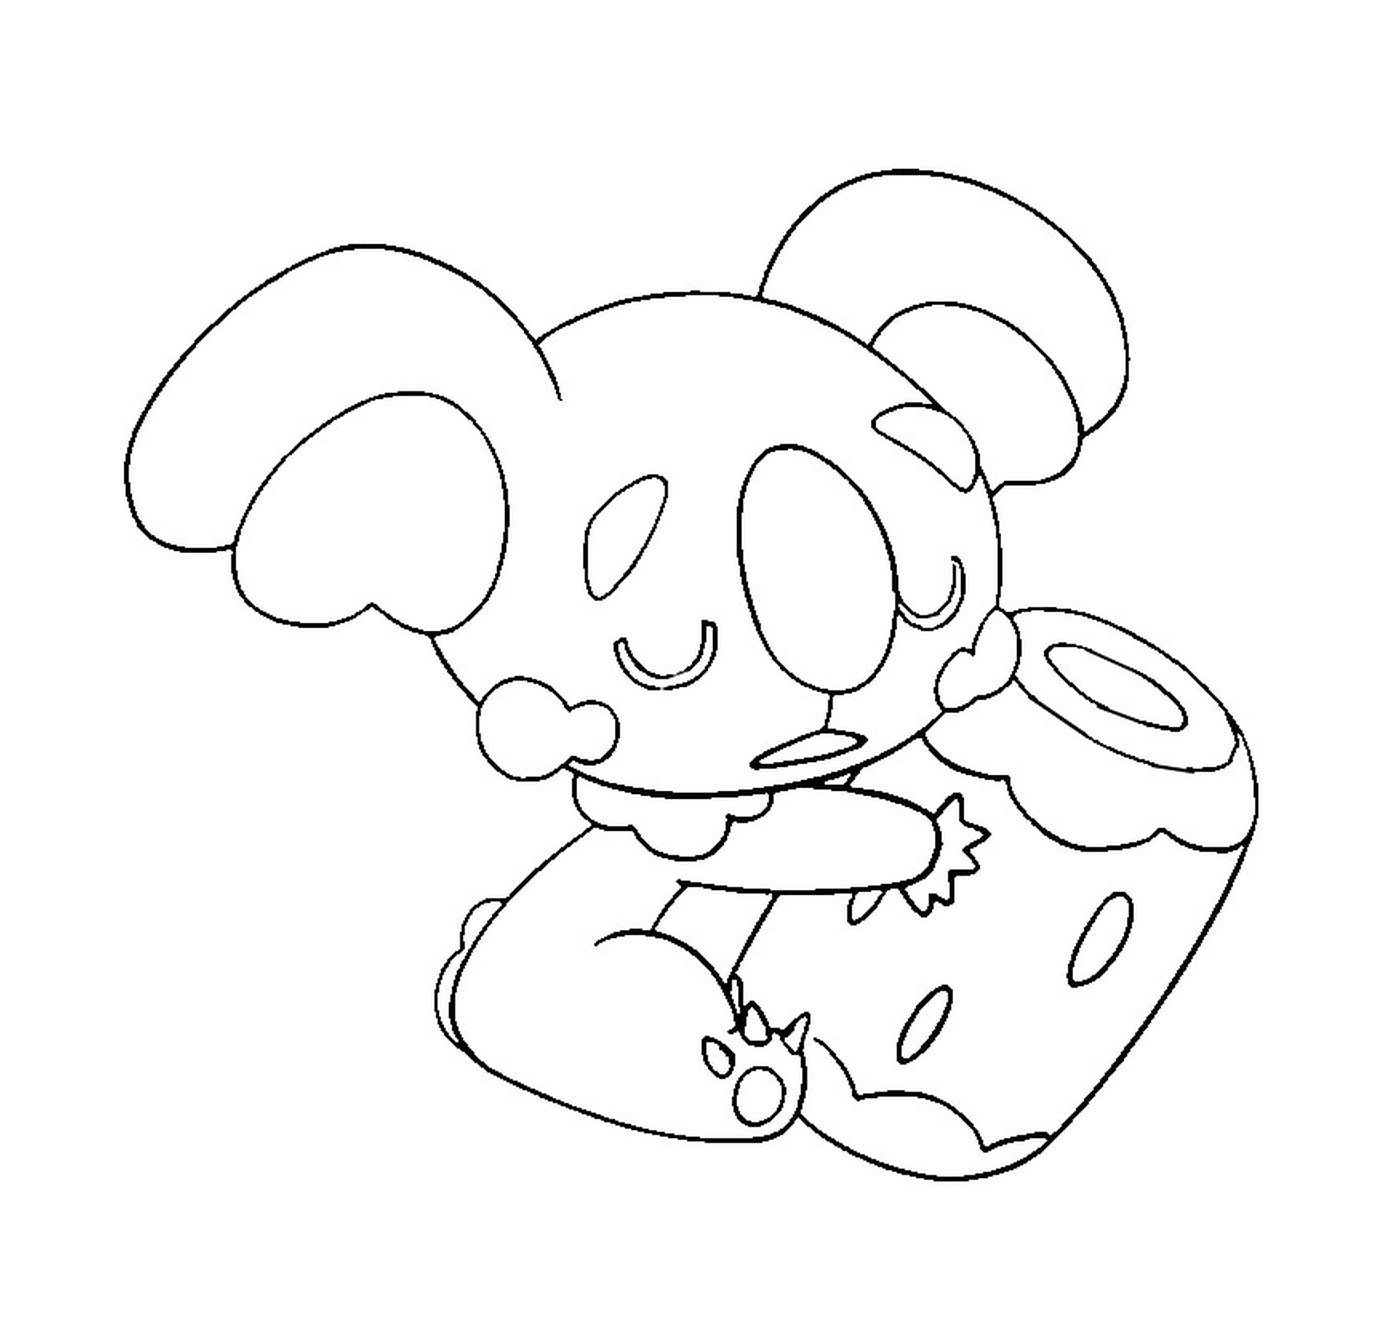   Dodoala, un animal qui mange quelque chose 